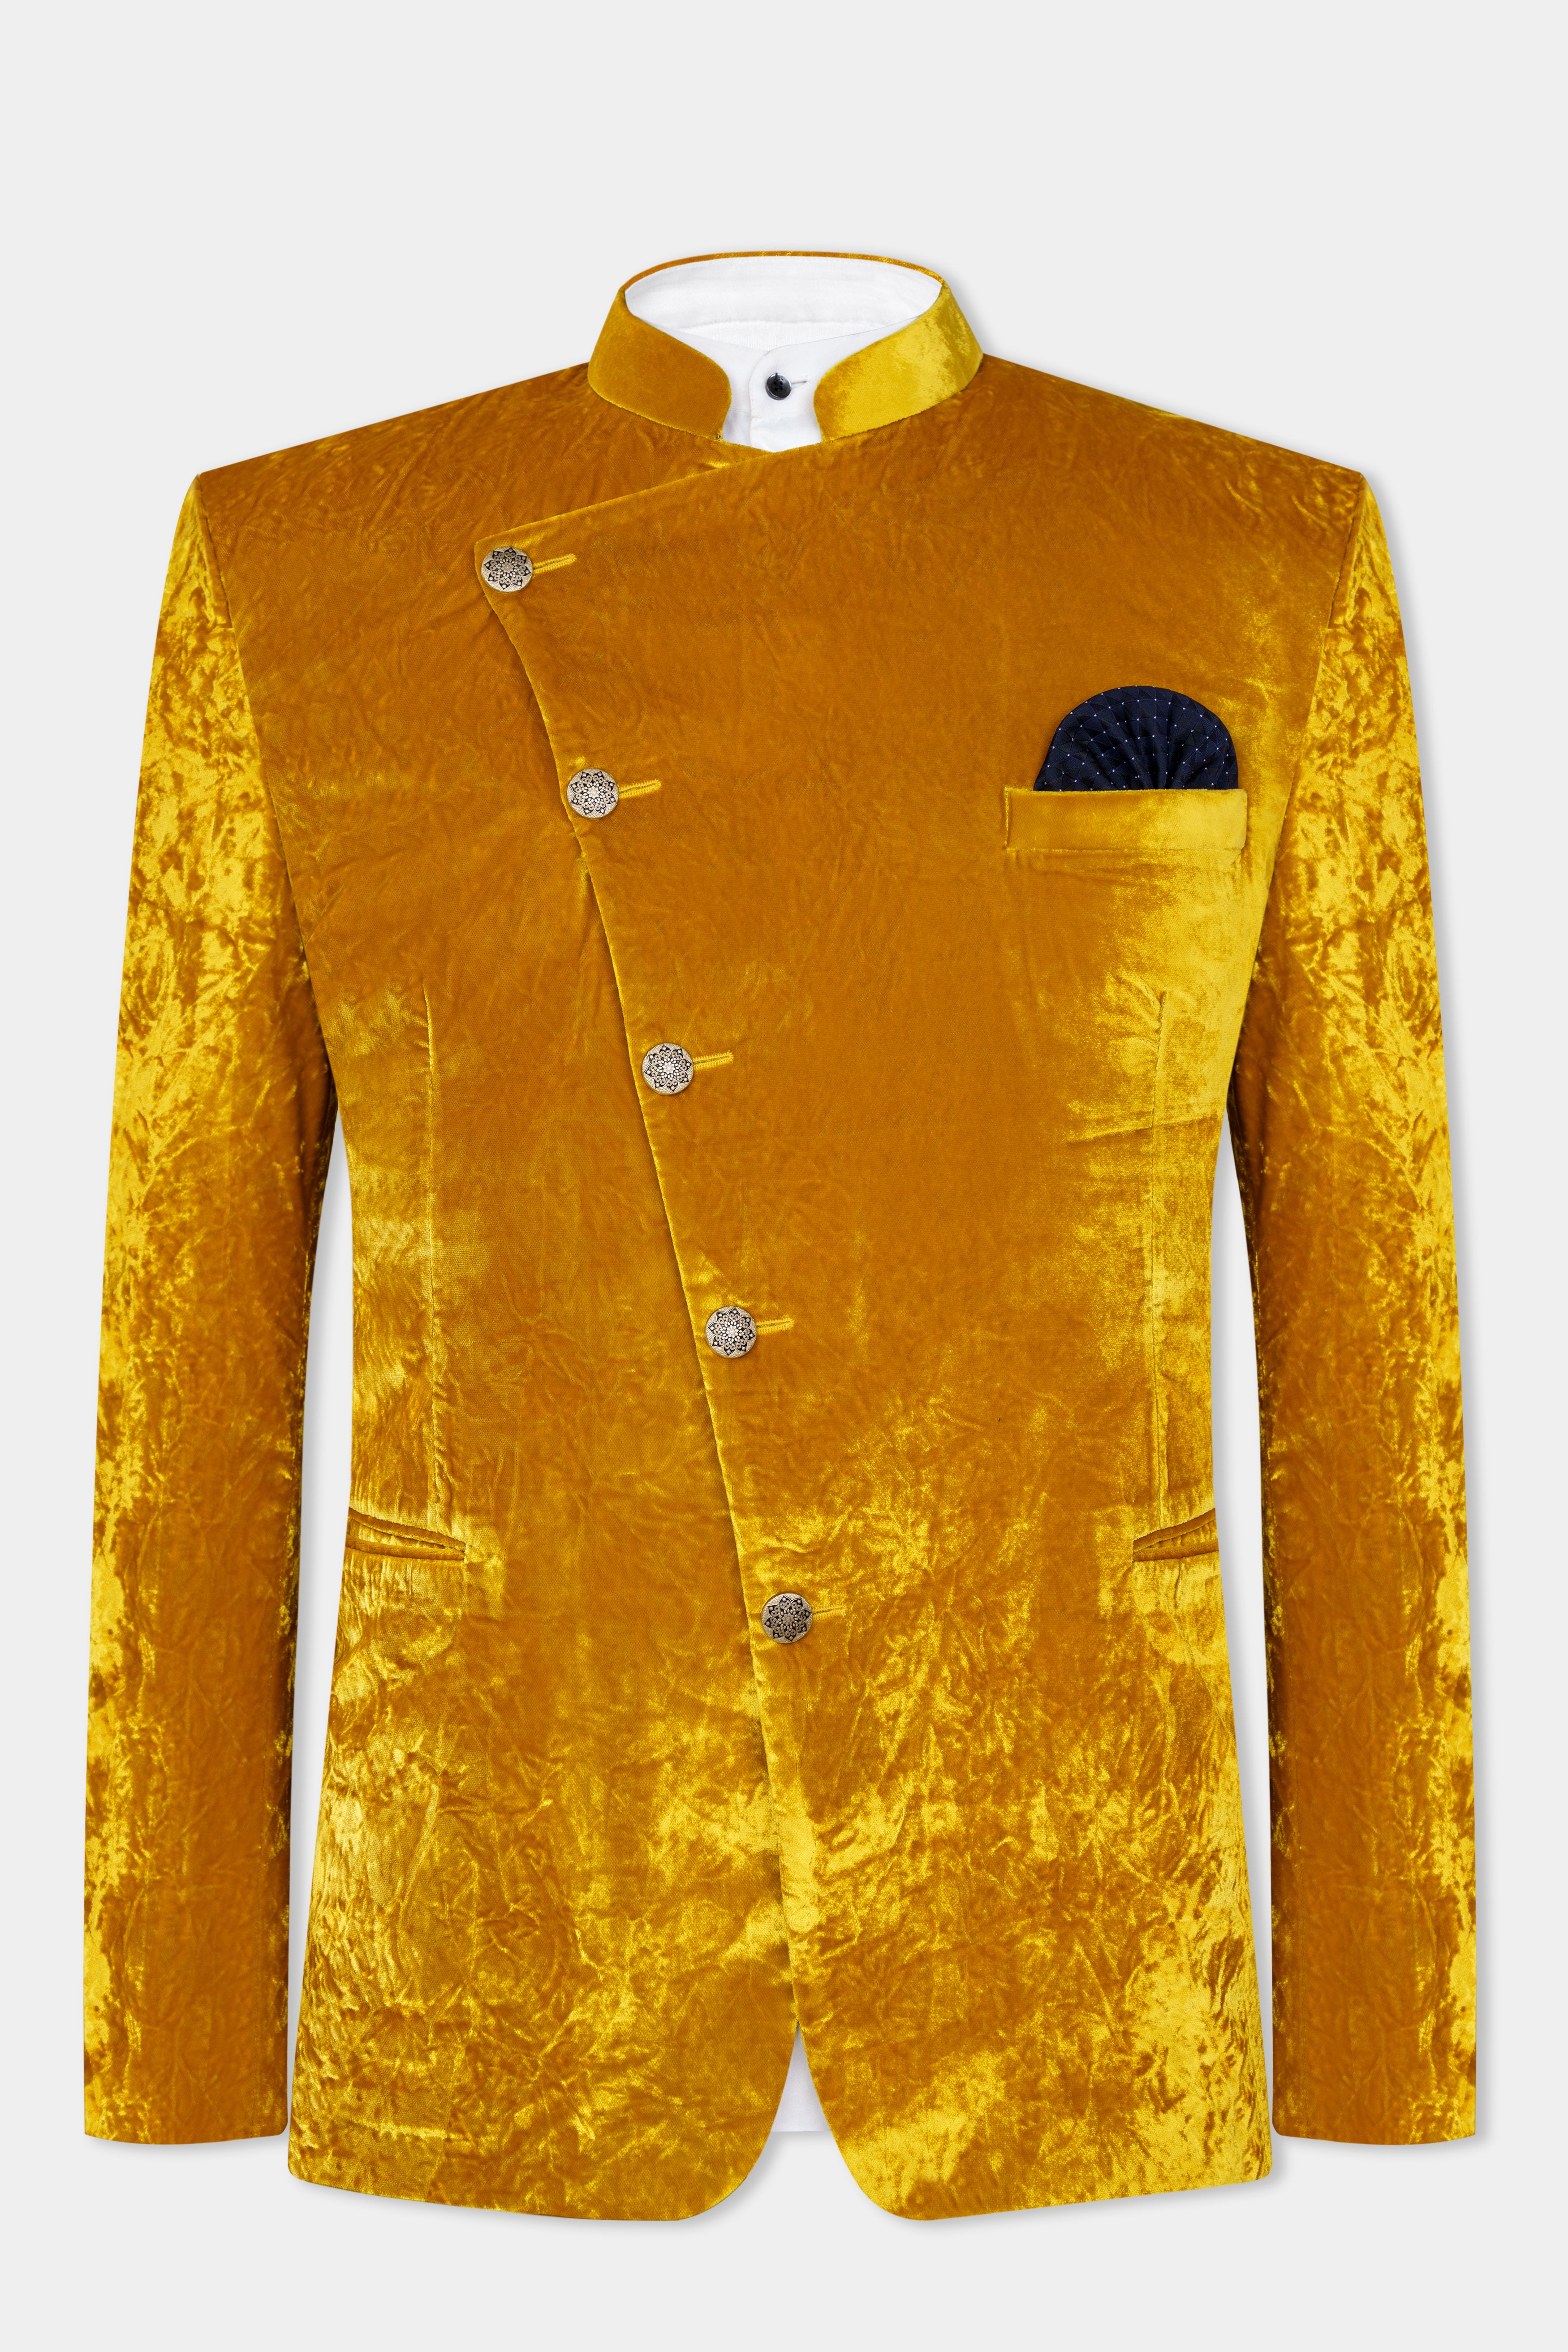 Gamboge Yellow Crushed Velvet Cross Placket Bandhgala Blazer